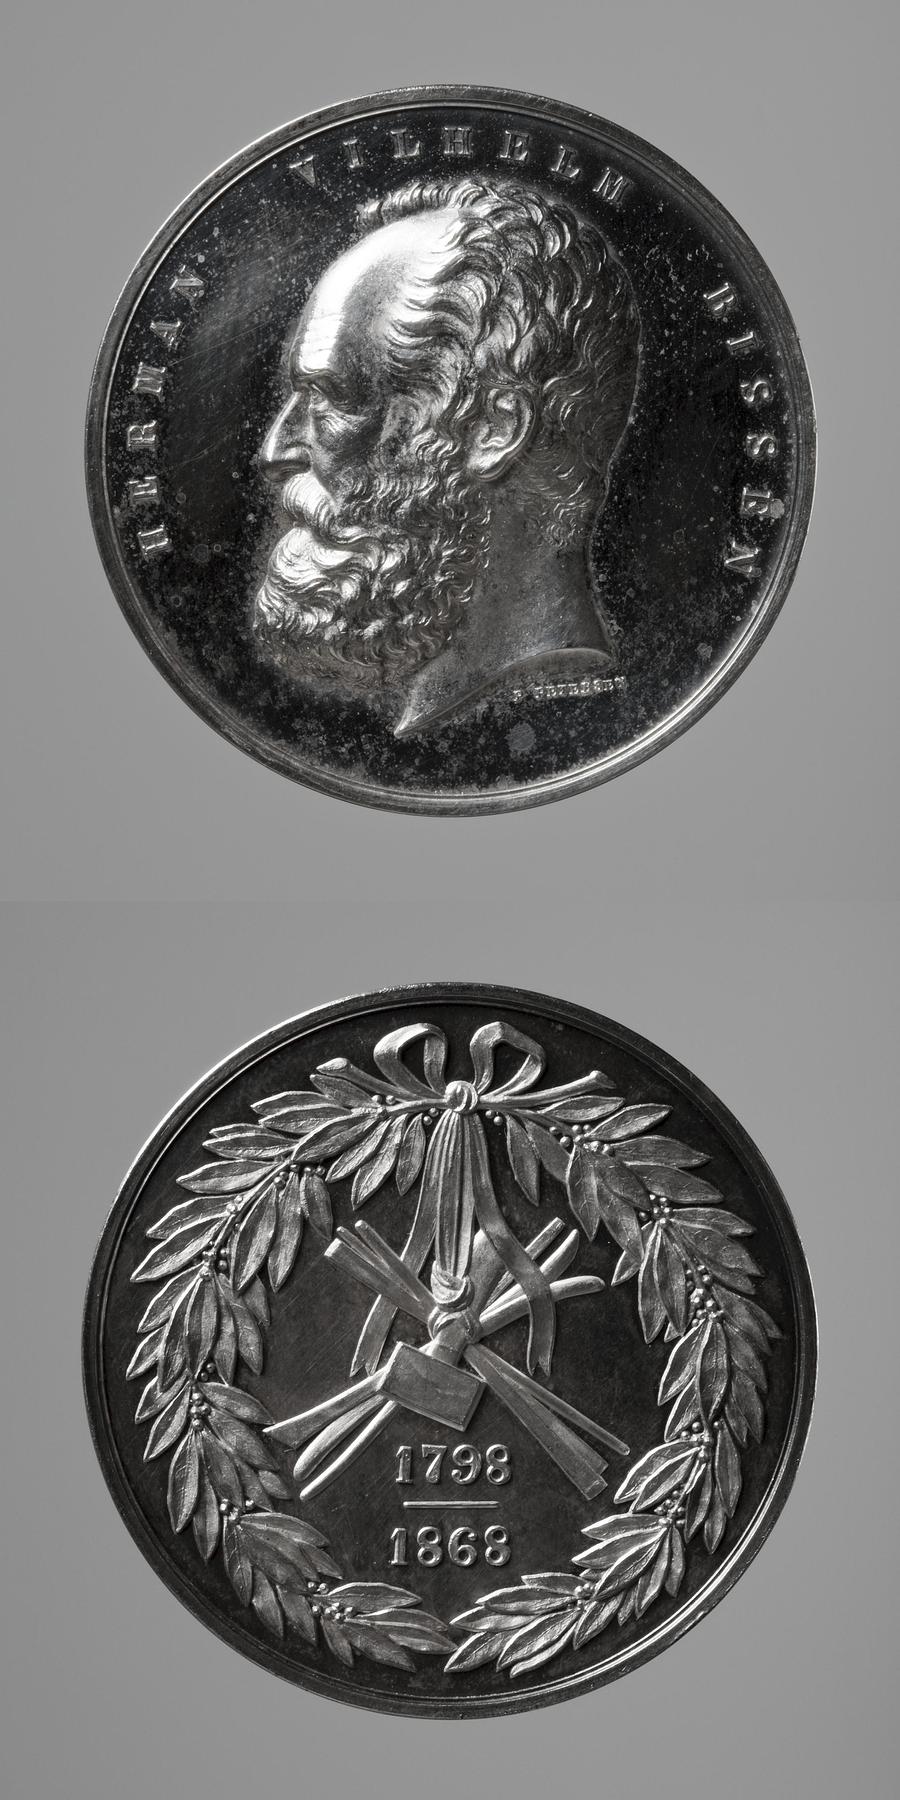 Medal obverse: H.W. Bissen. Medal reverse: Laurel wreath and sculptors' tools, F146